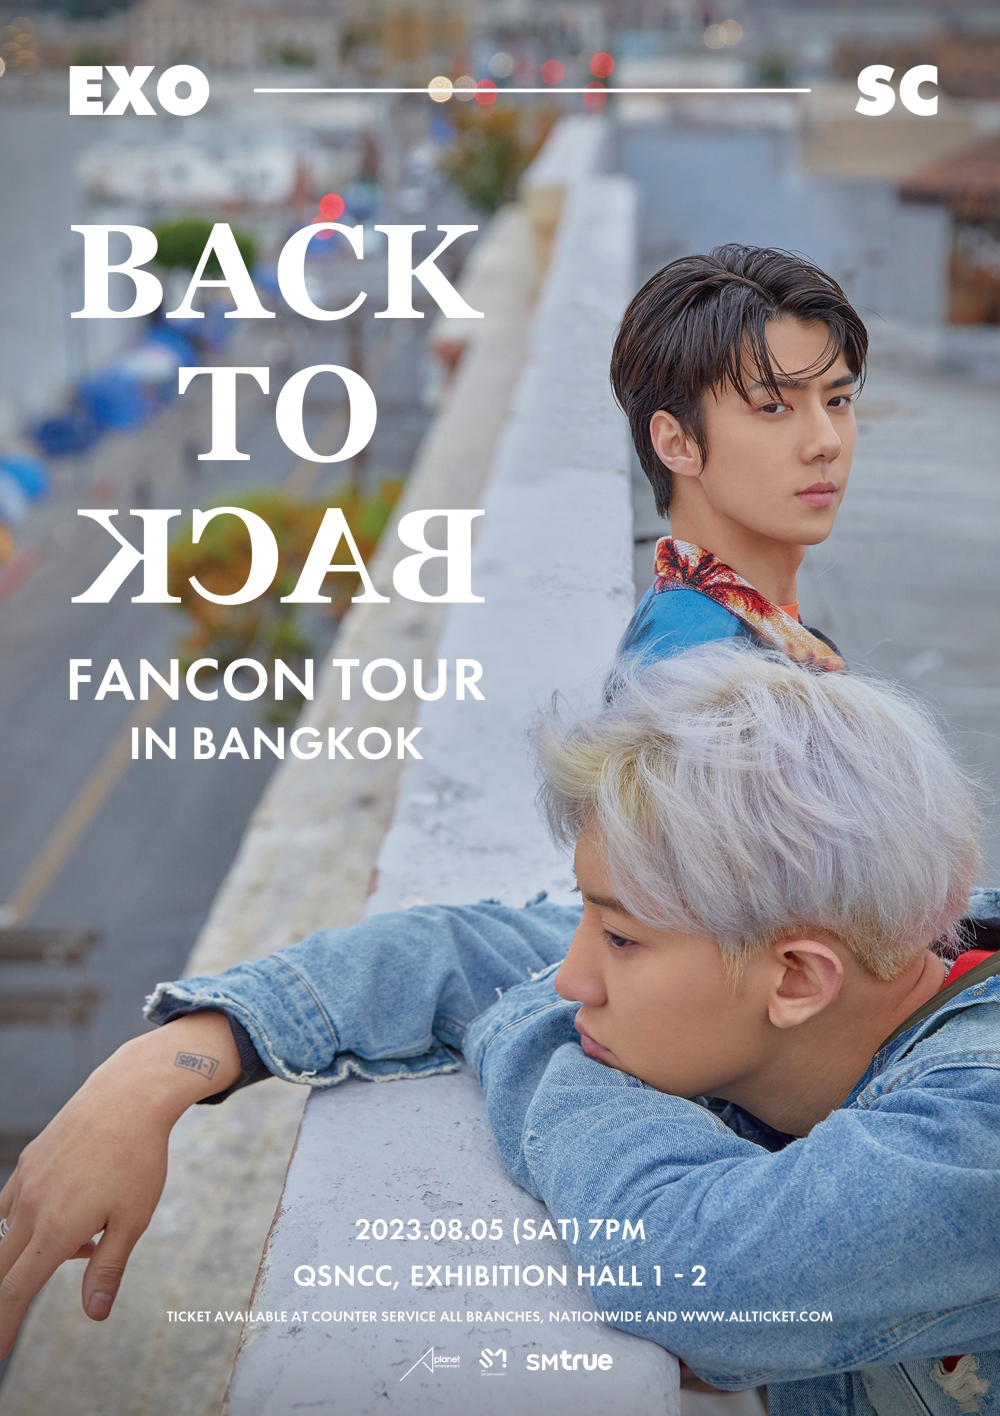 EXO-SC BACK TO BACK FANCON IN BANGKOK